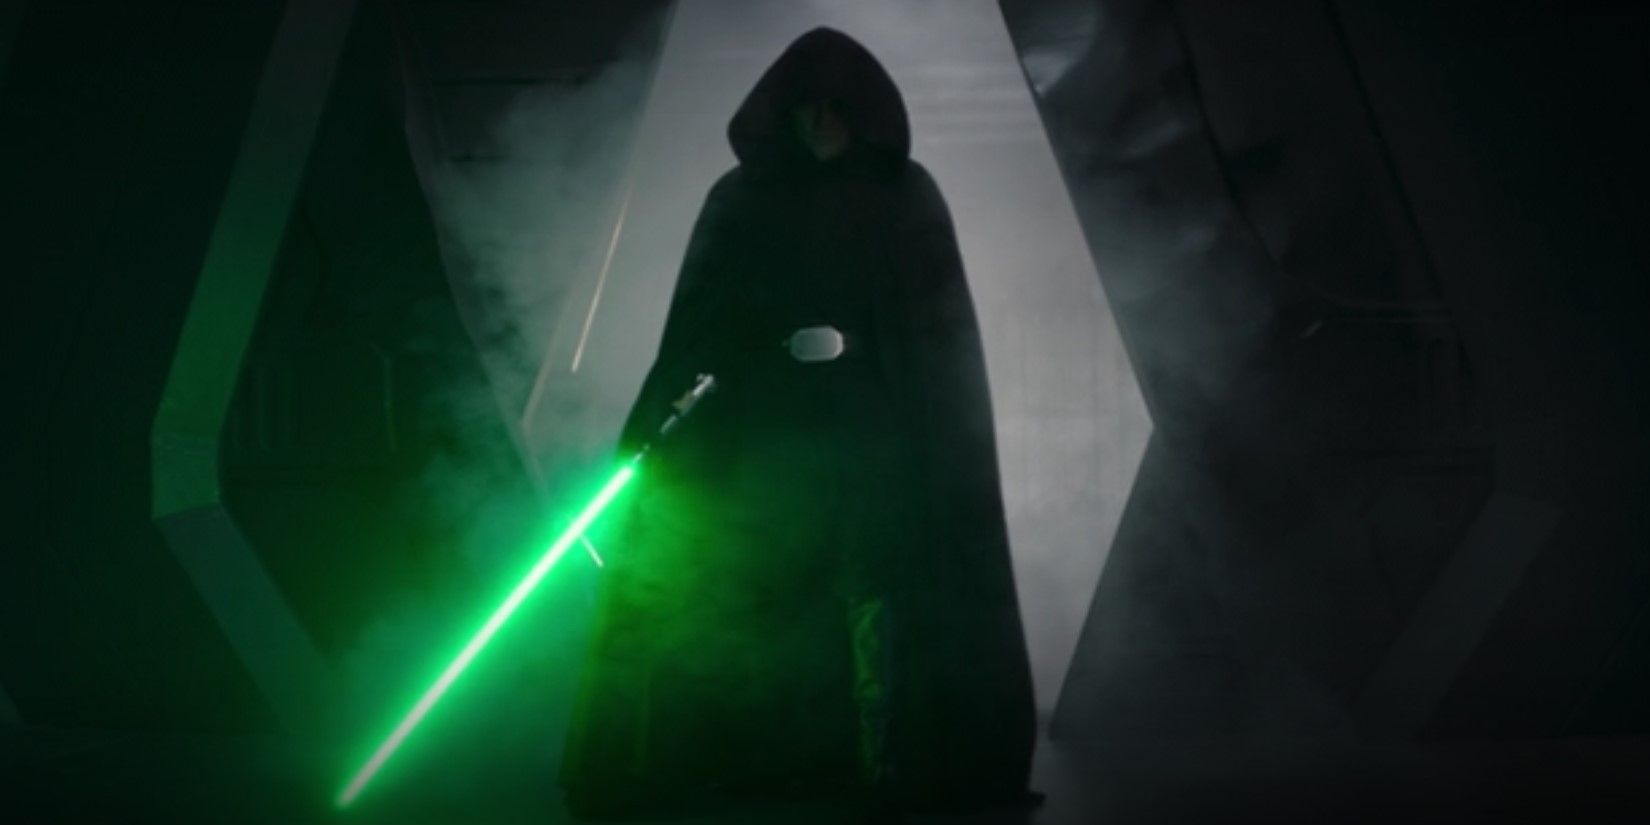 An image of Luke Skywalker holding a lightsaber in Star Wars